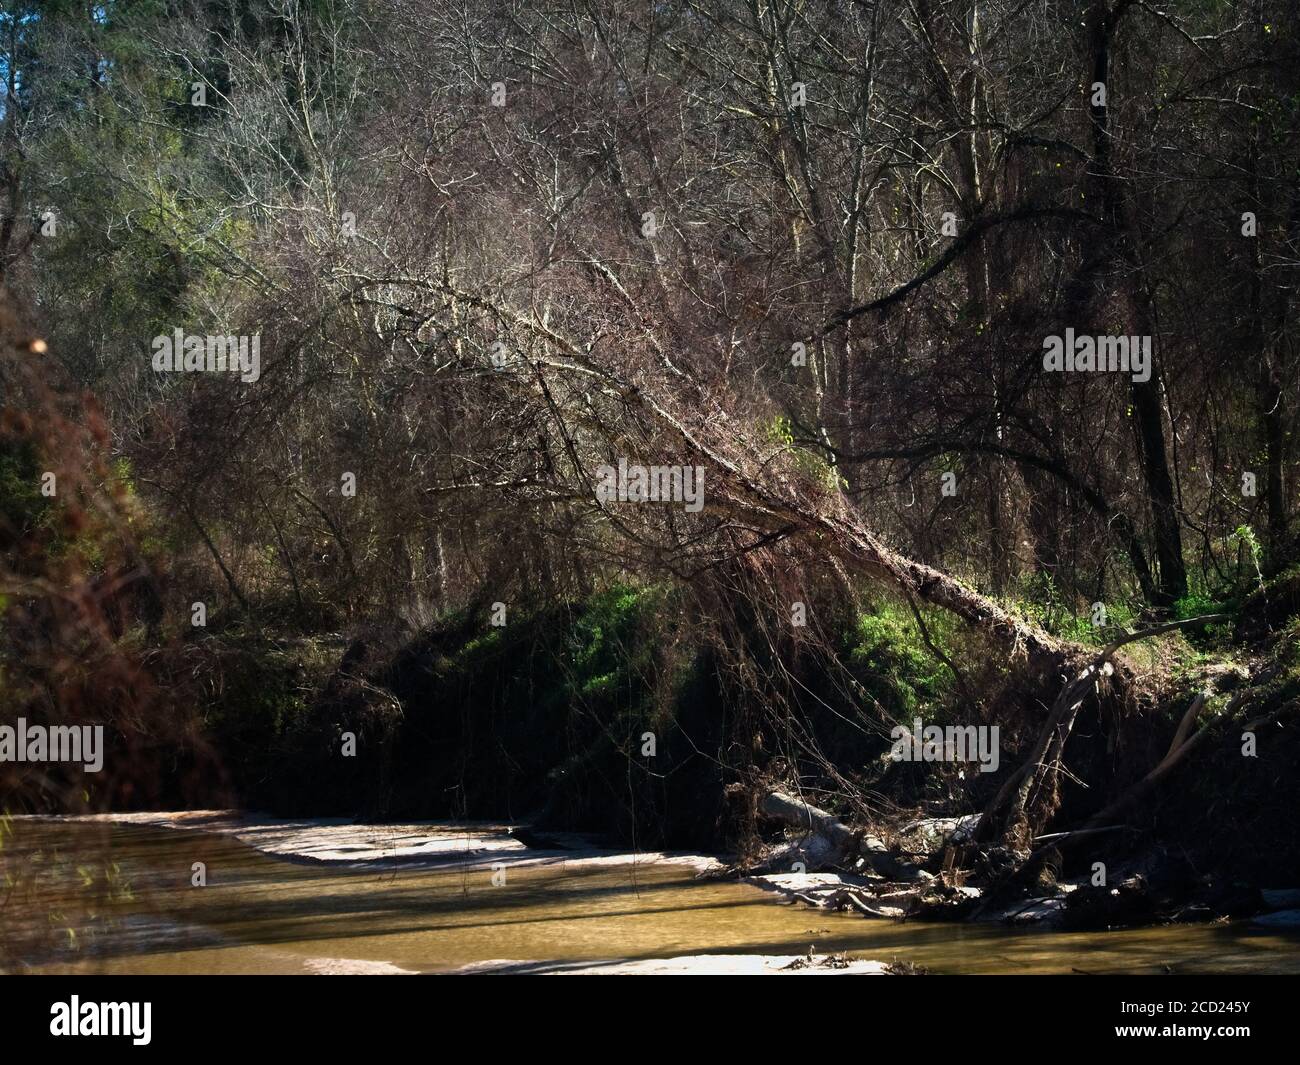 The Woodlands TX USA - 01-20-2020 - Tree over Creek Stockfoto